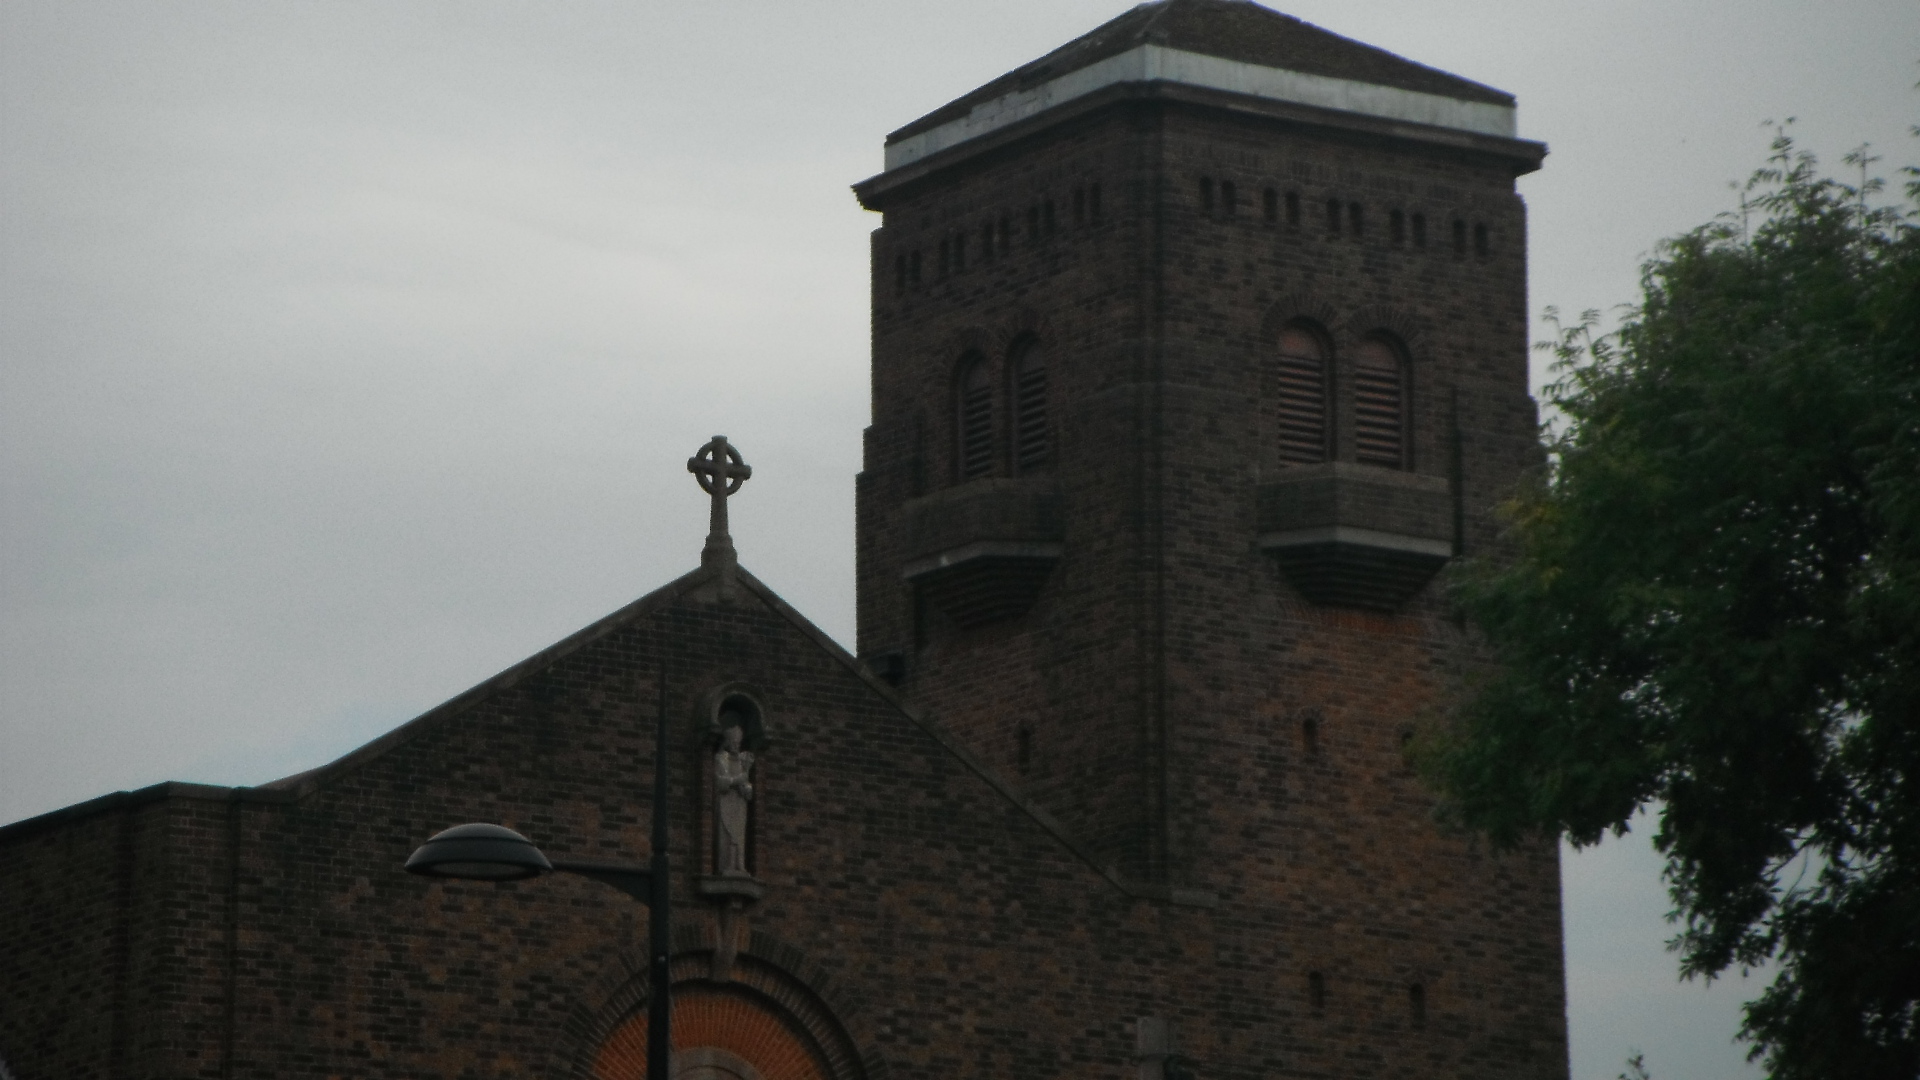  Photo taken by me – St Dunstan&#039;s Church, Moston, Manchester 